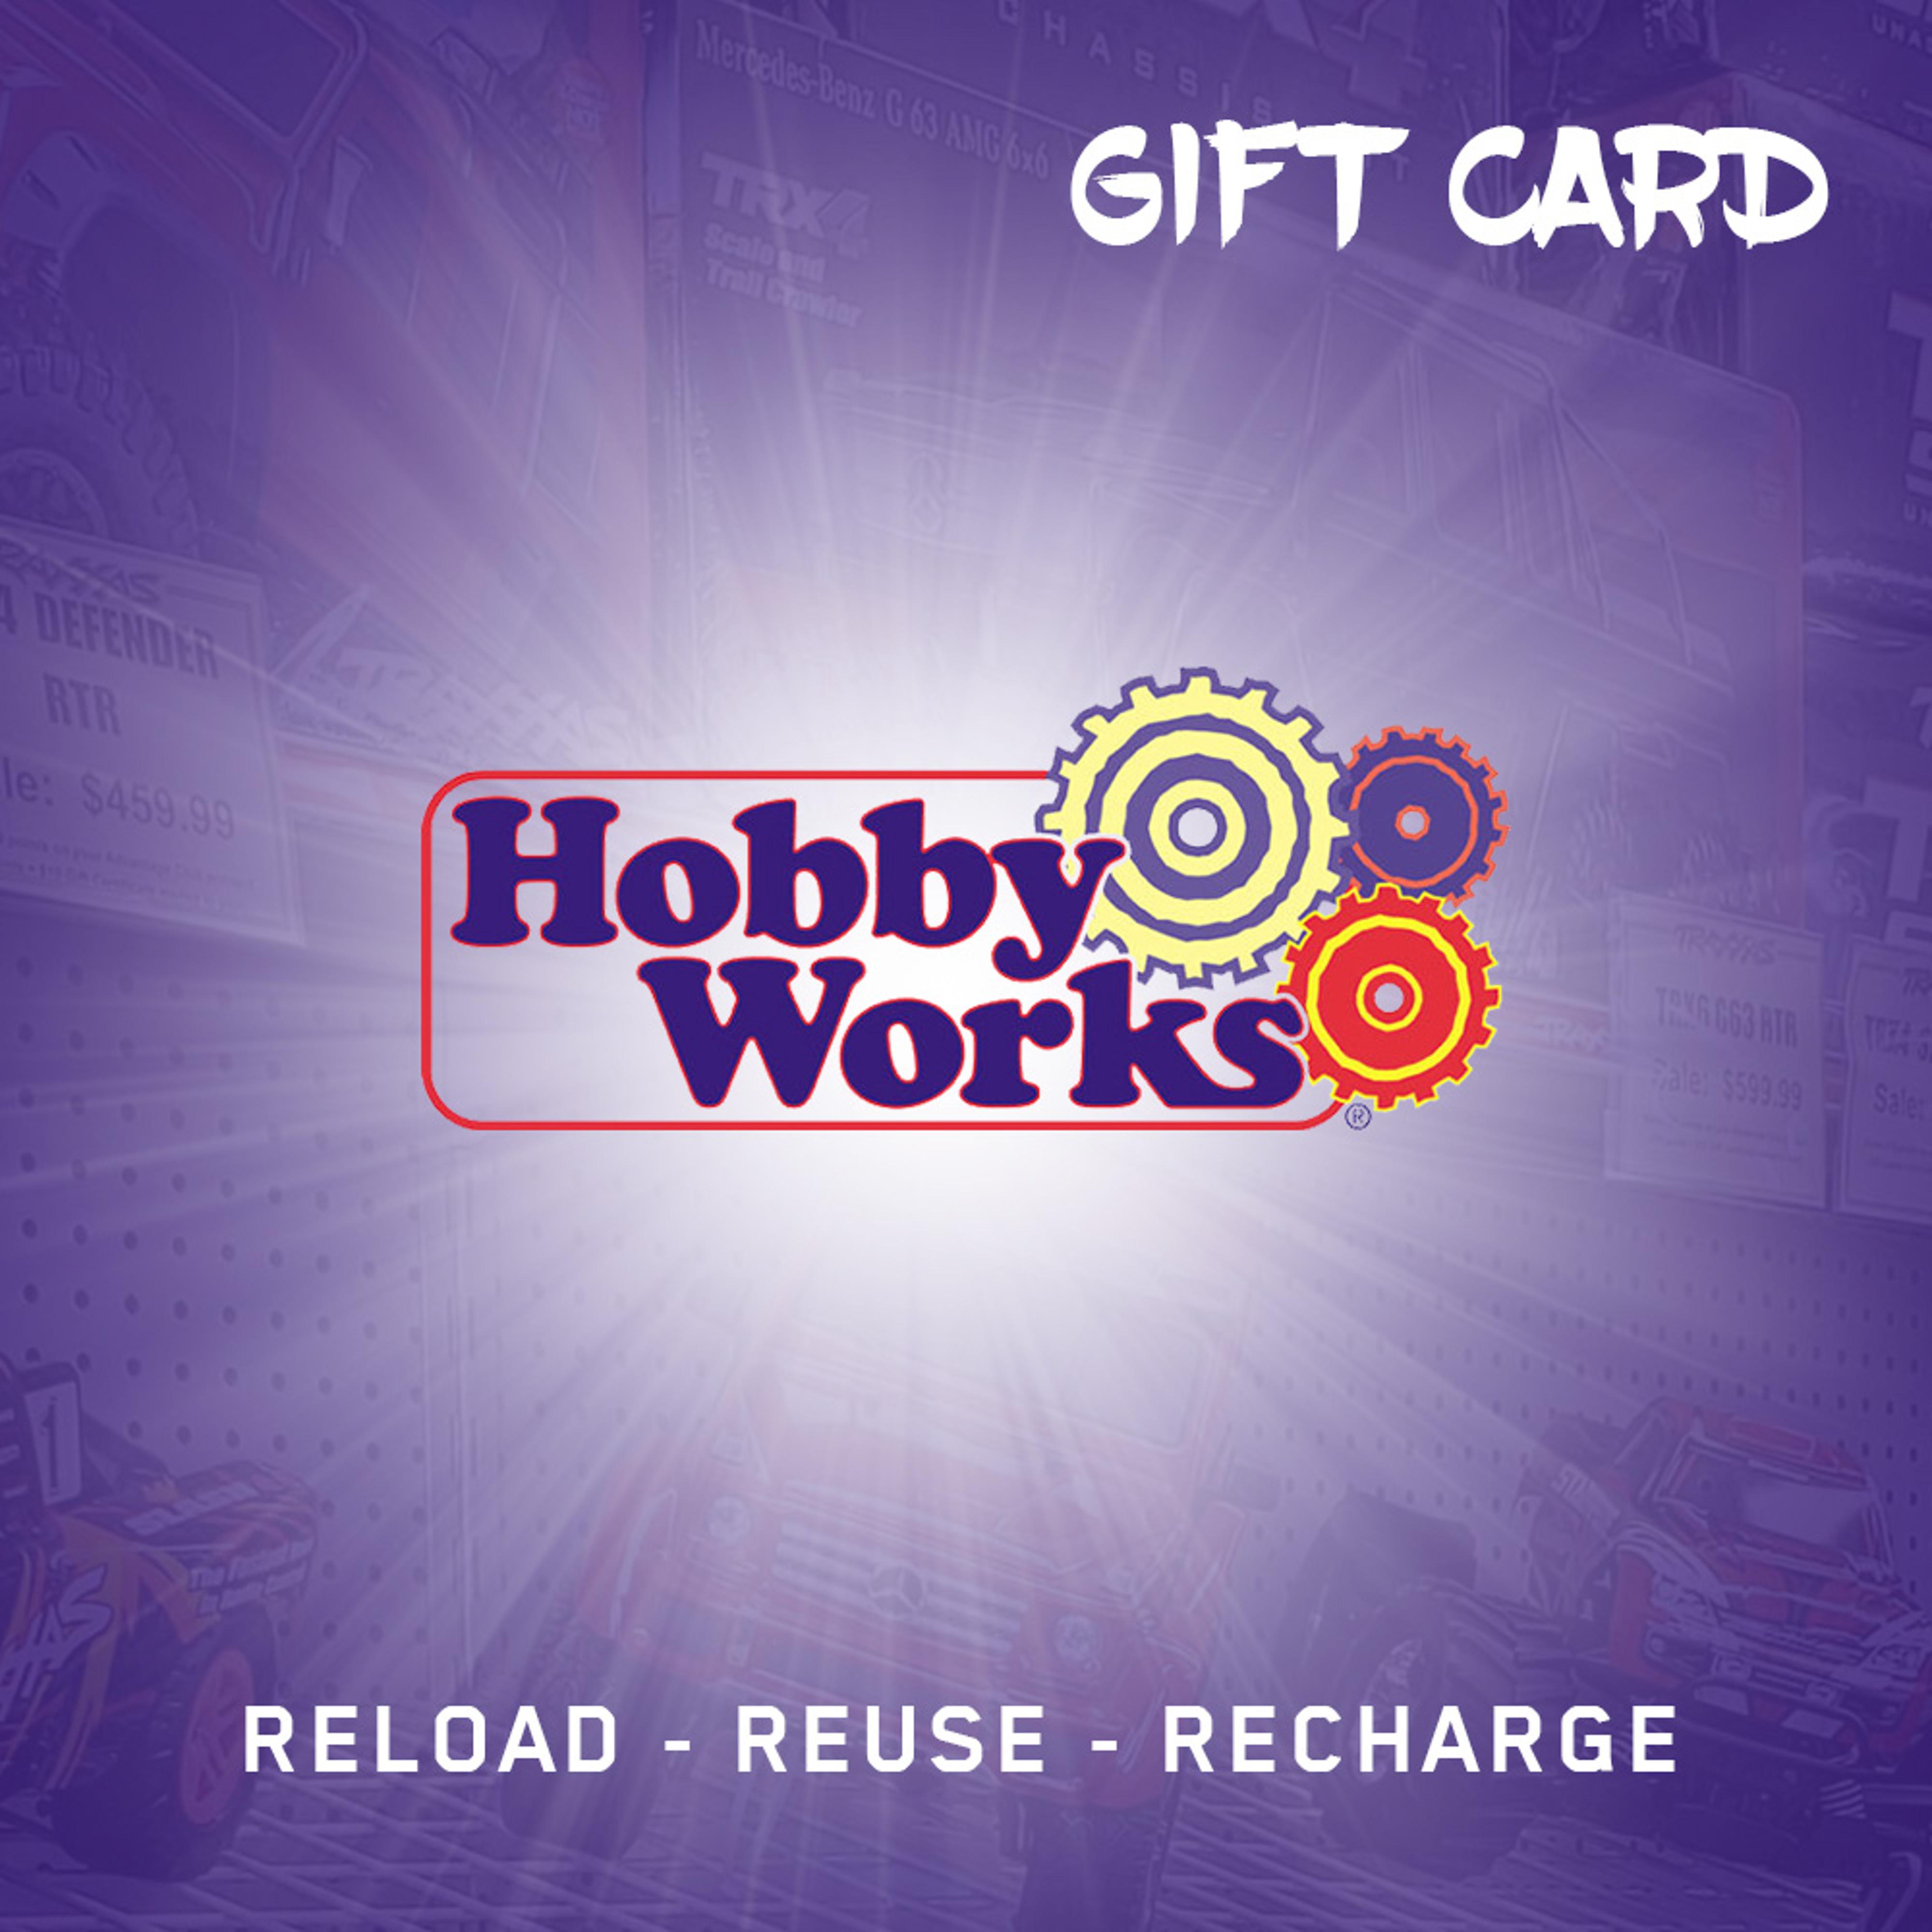 Hobby Works Gift Card: $50